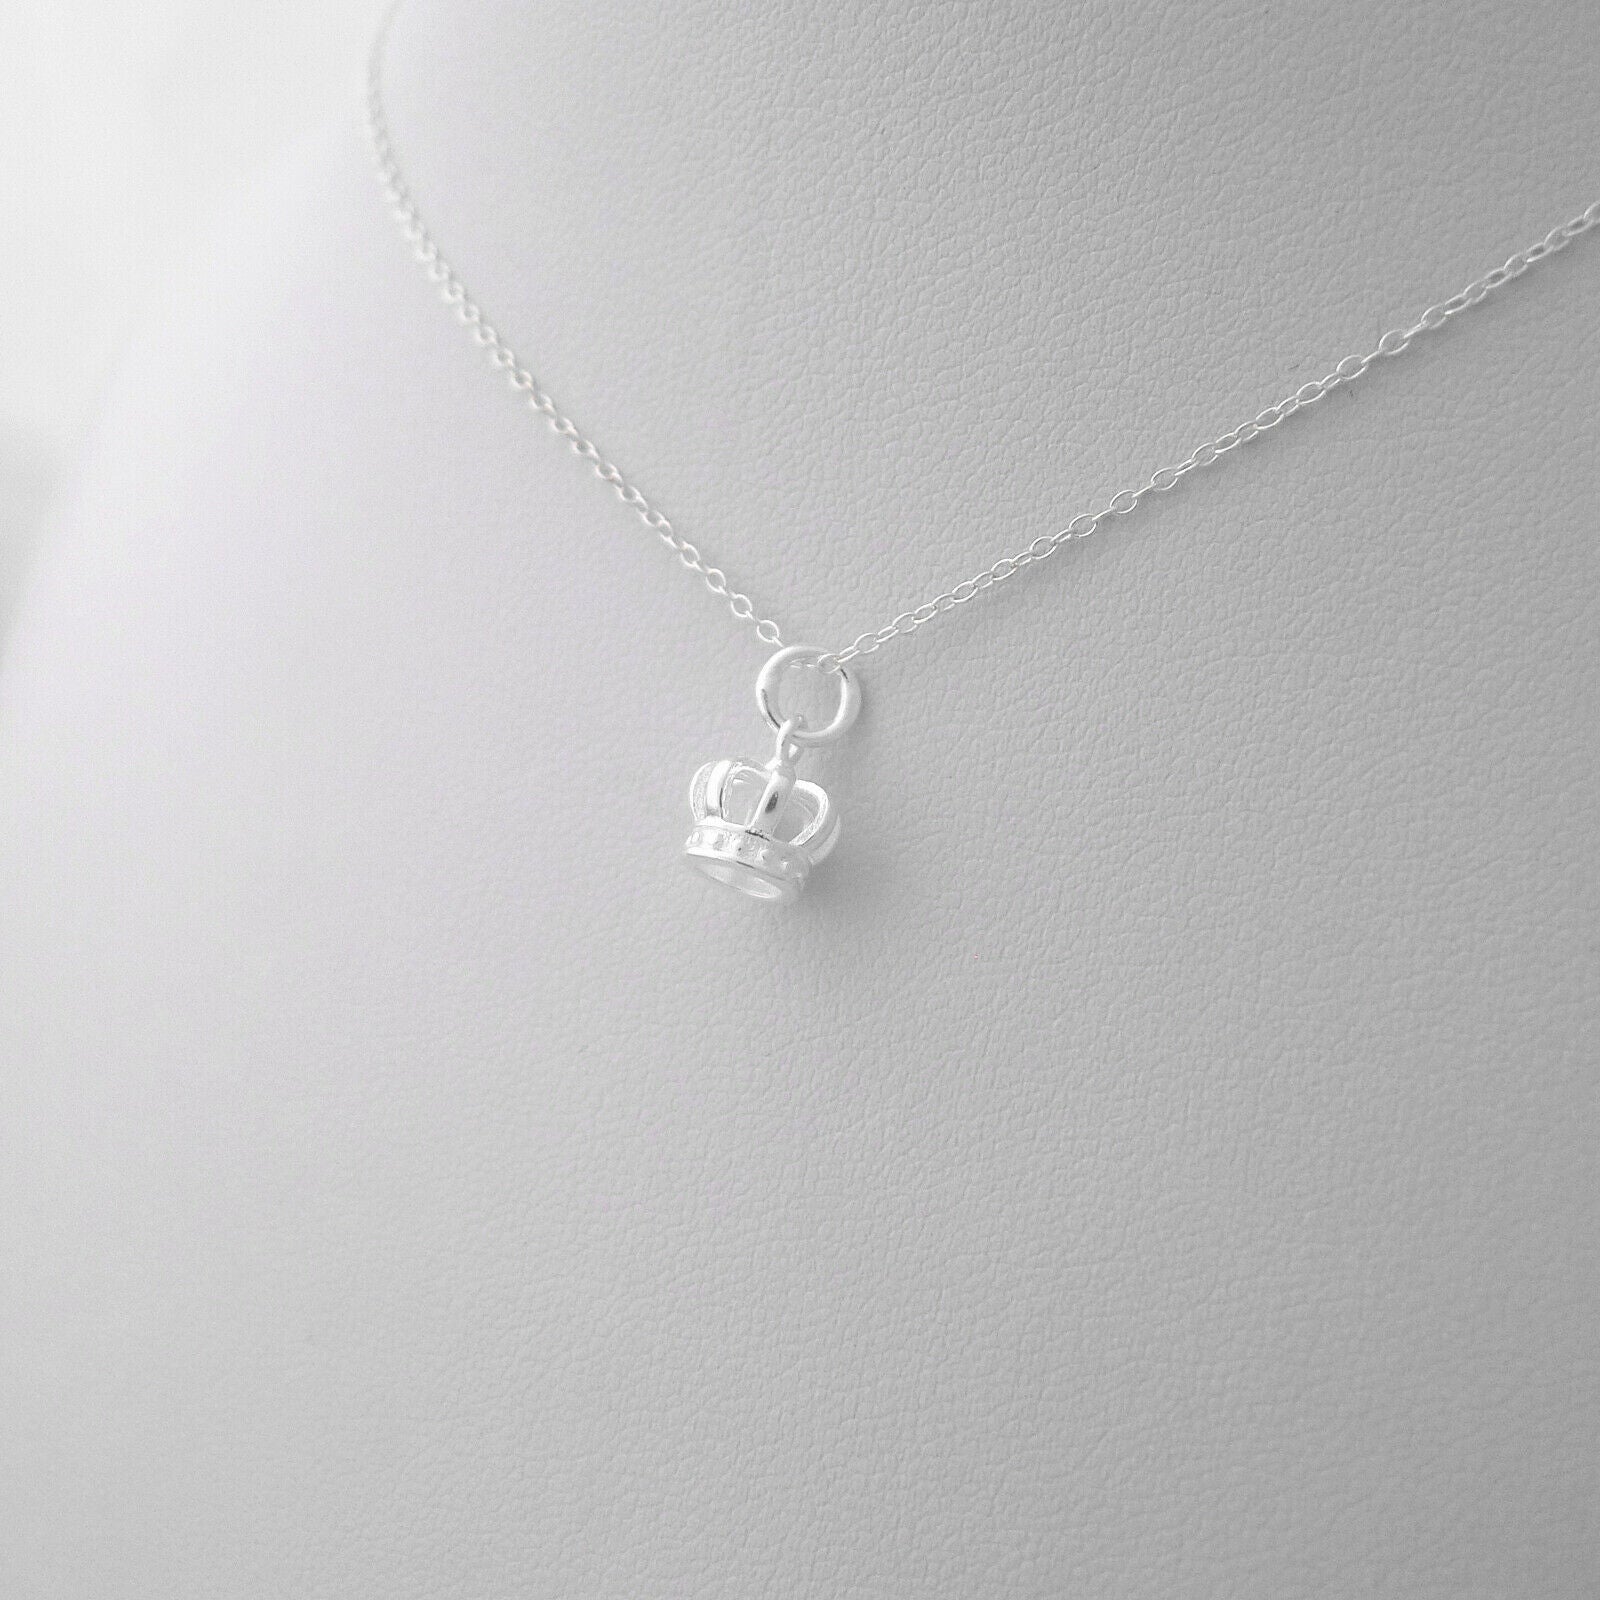 Sterling Silver Crown Cross Bead Charm Pendant For Necklace Bracelet - sugarkittenlondon